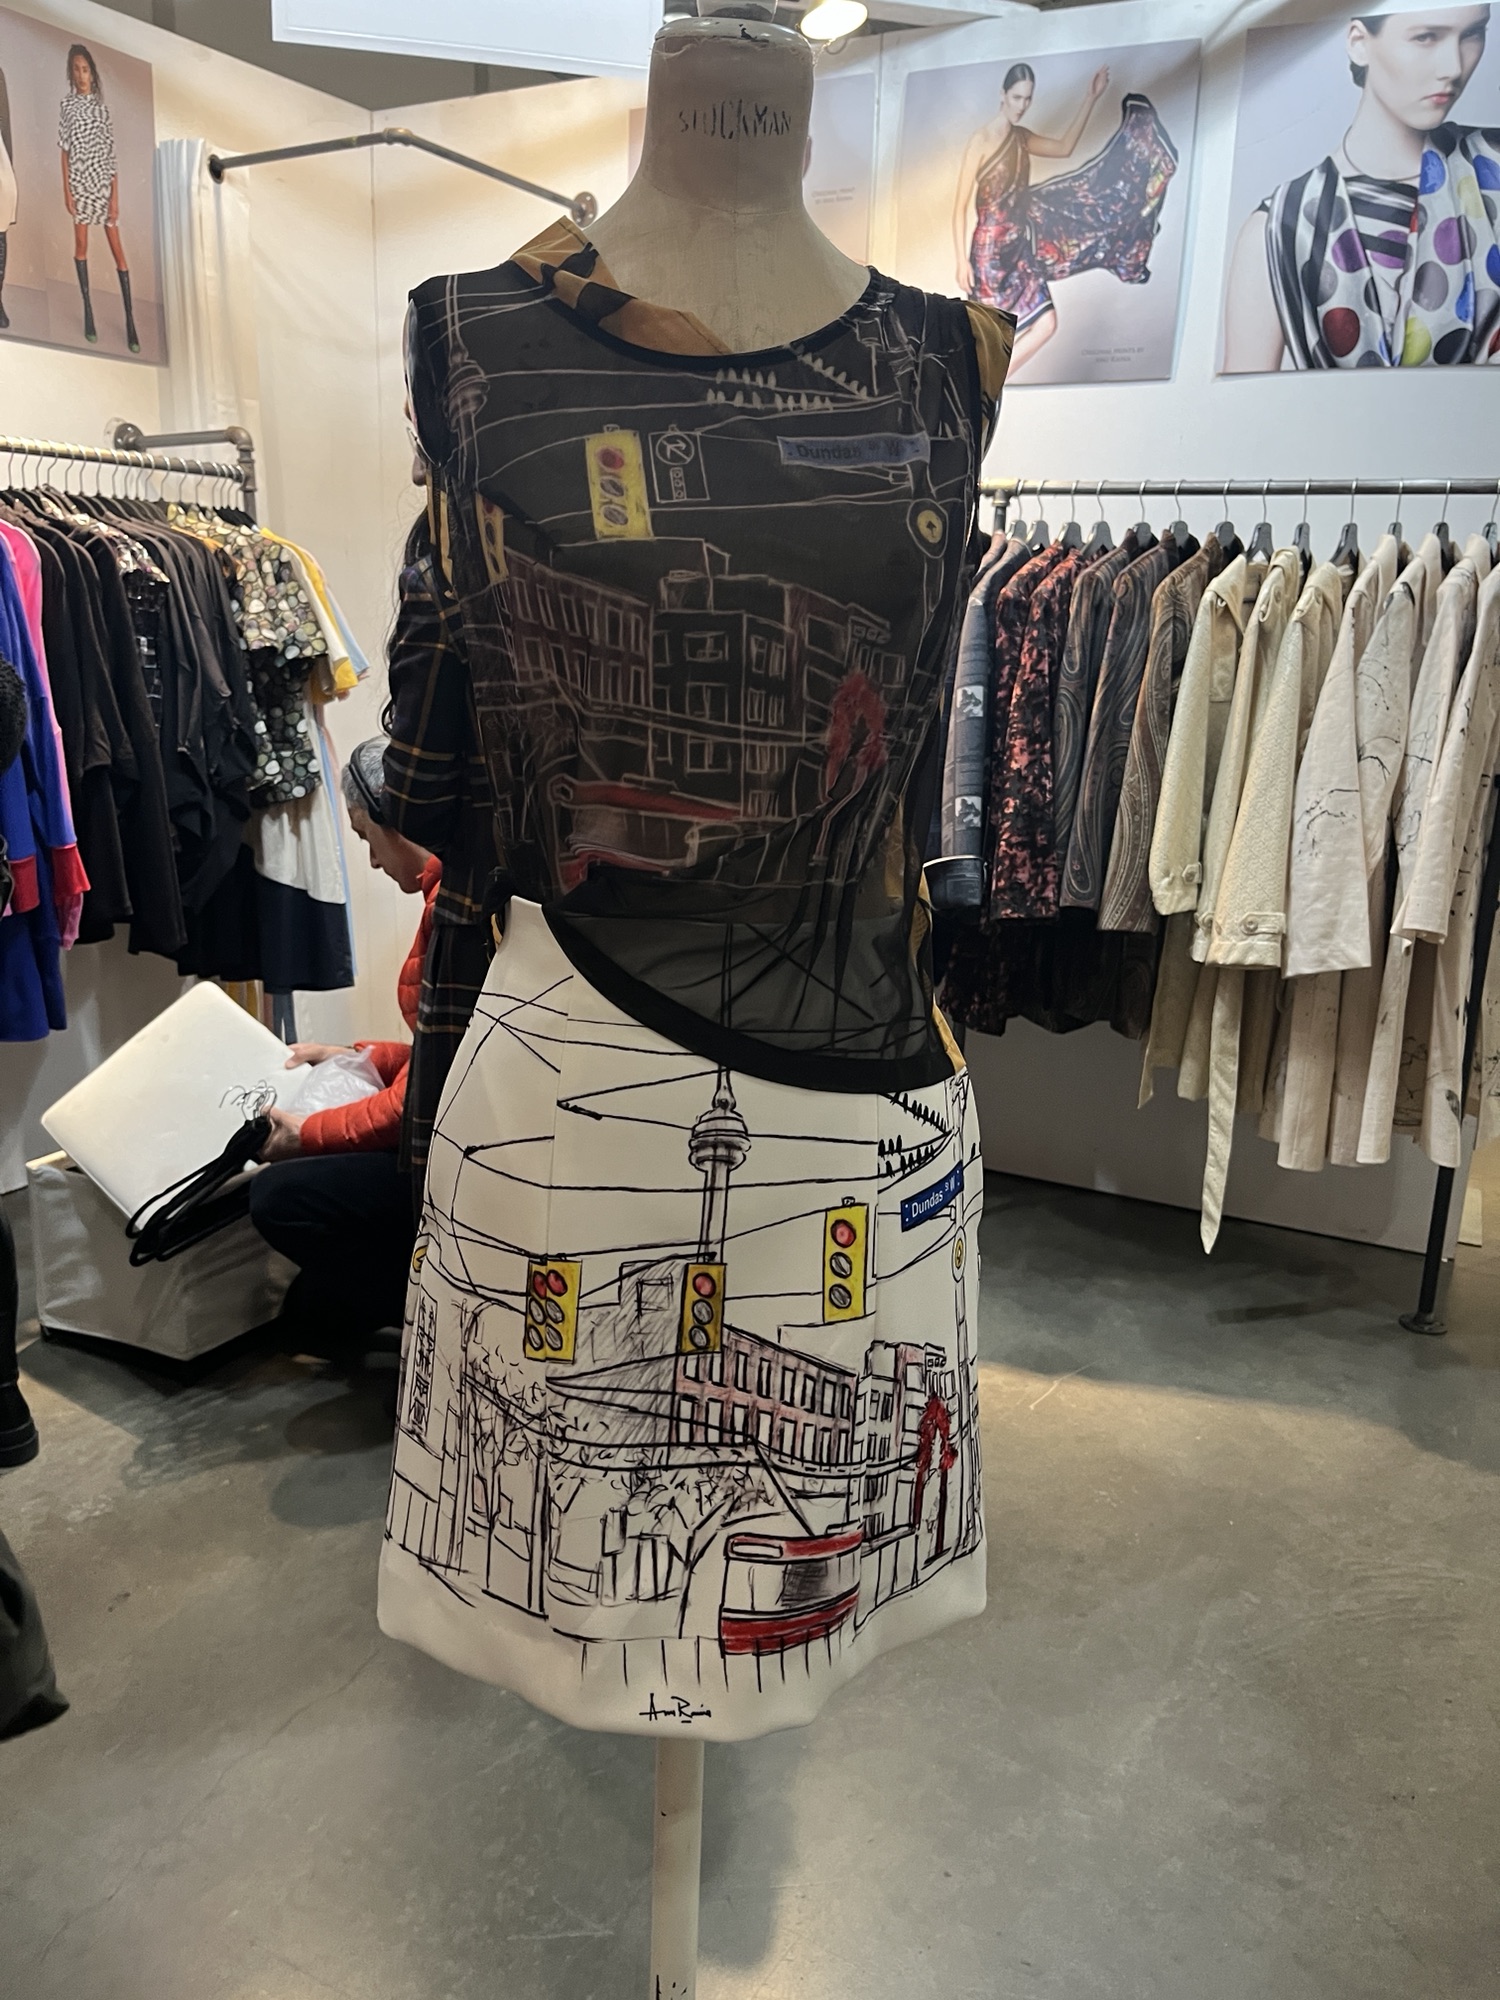 Olivia Chow Toronto Skirt: The Dundas West Skirt by Anu Raina